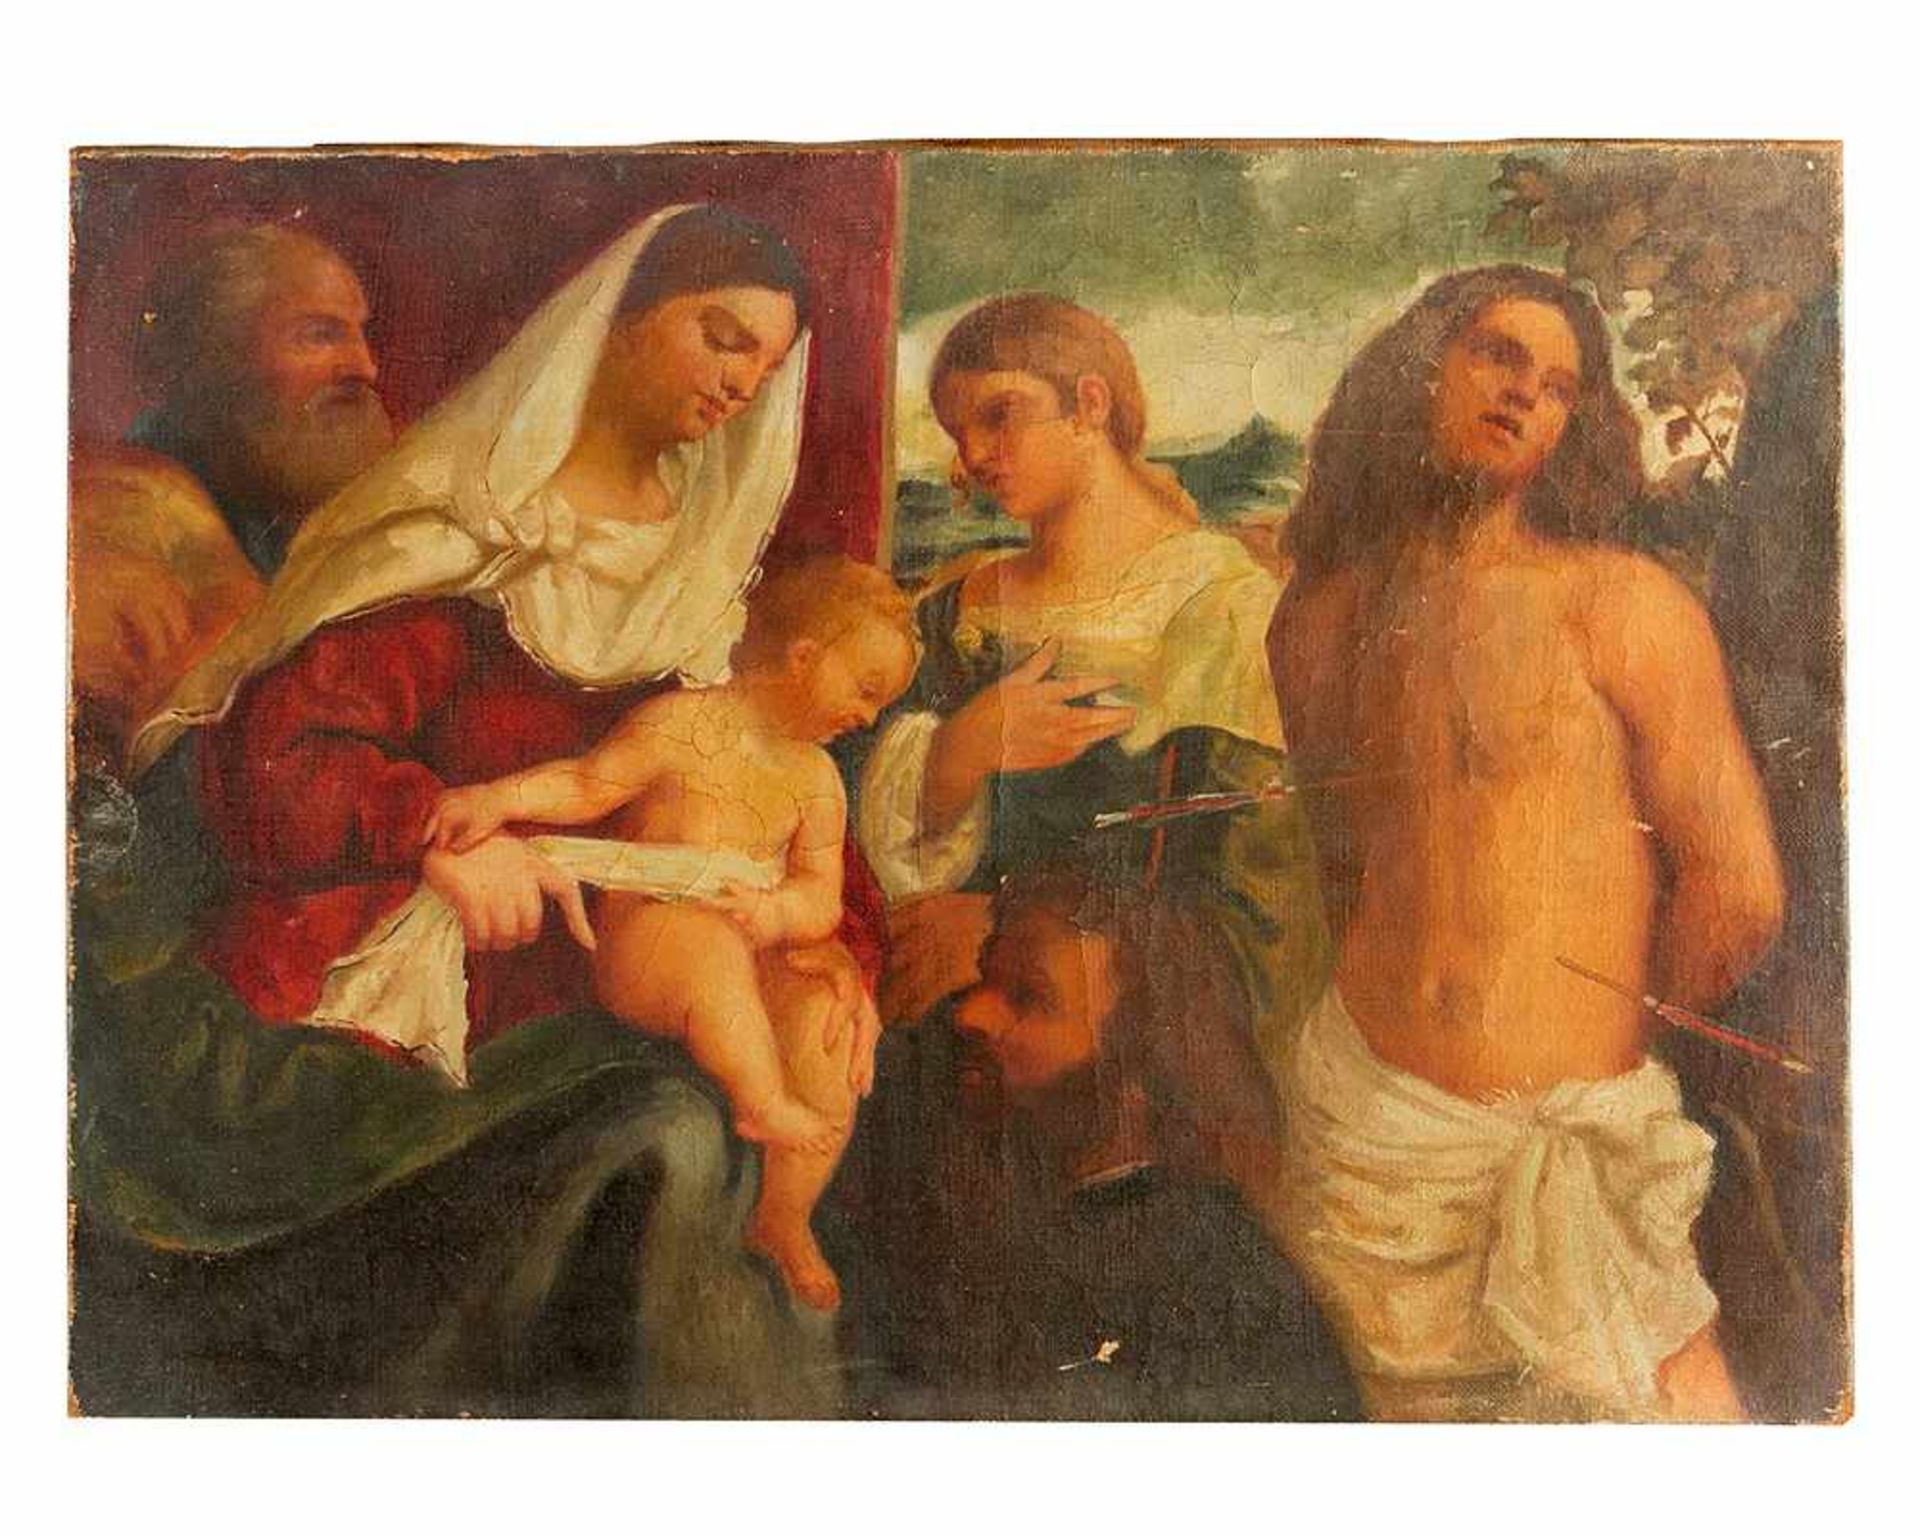 Tiziano Vecellio (1490-1576)-follower, The Holy Family with Saint Sebastian in landscape, oil on